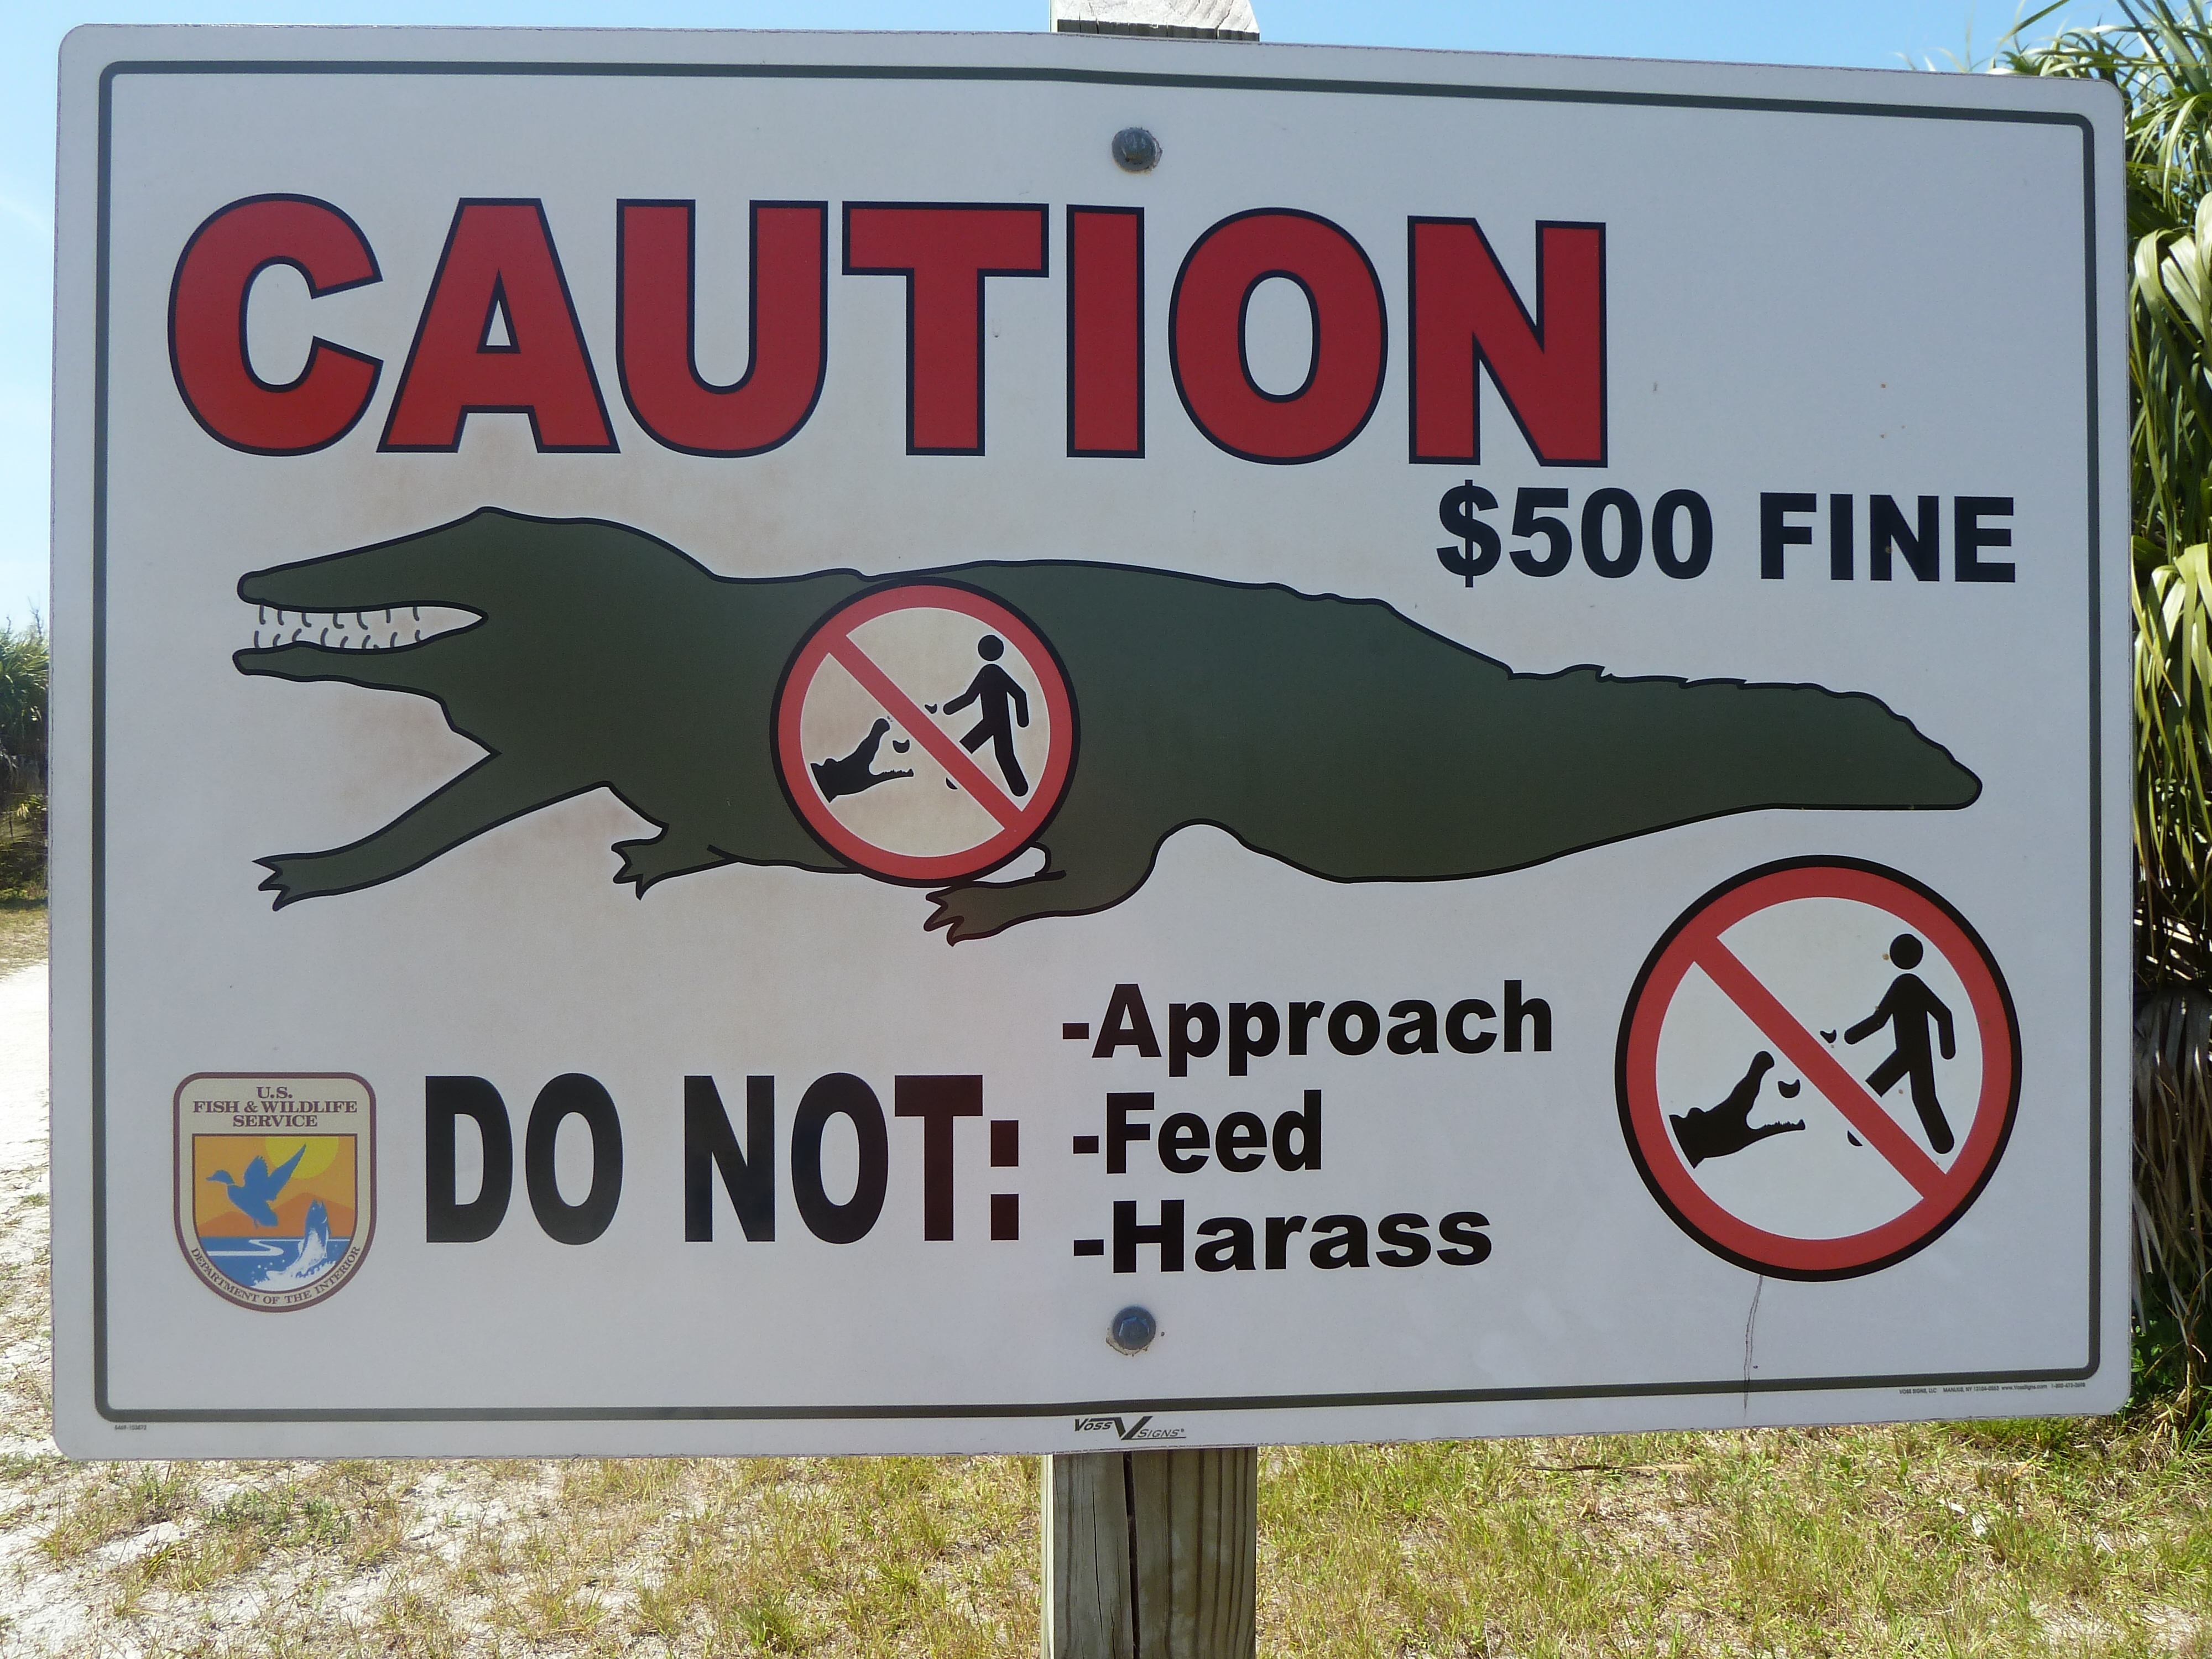 An alligator warning sign in Sanibel, Fla. Photo credit: M. Ciavardini